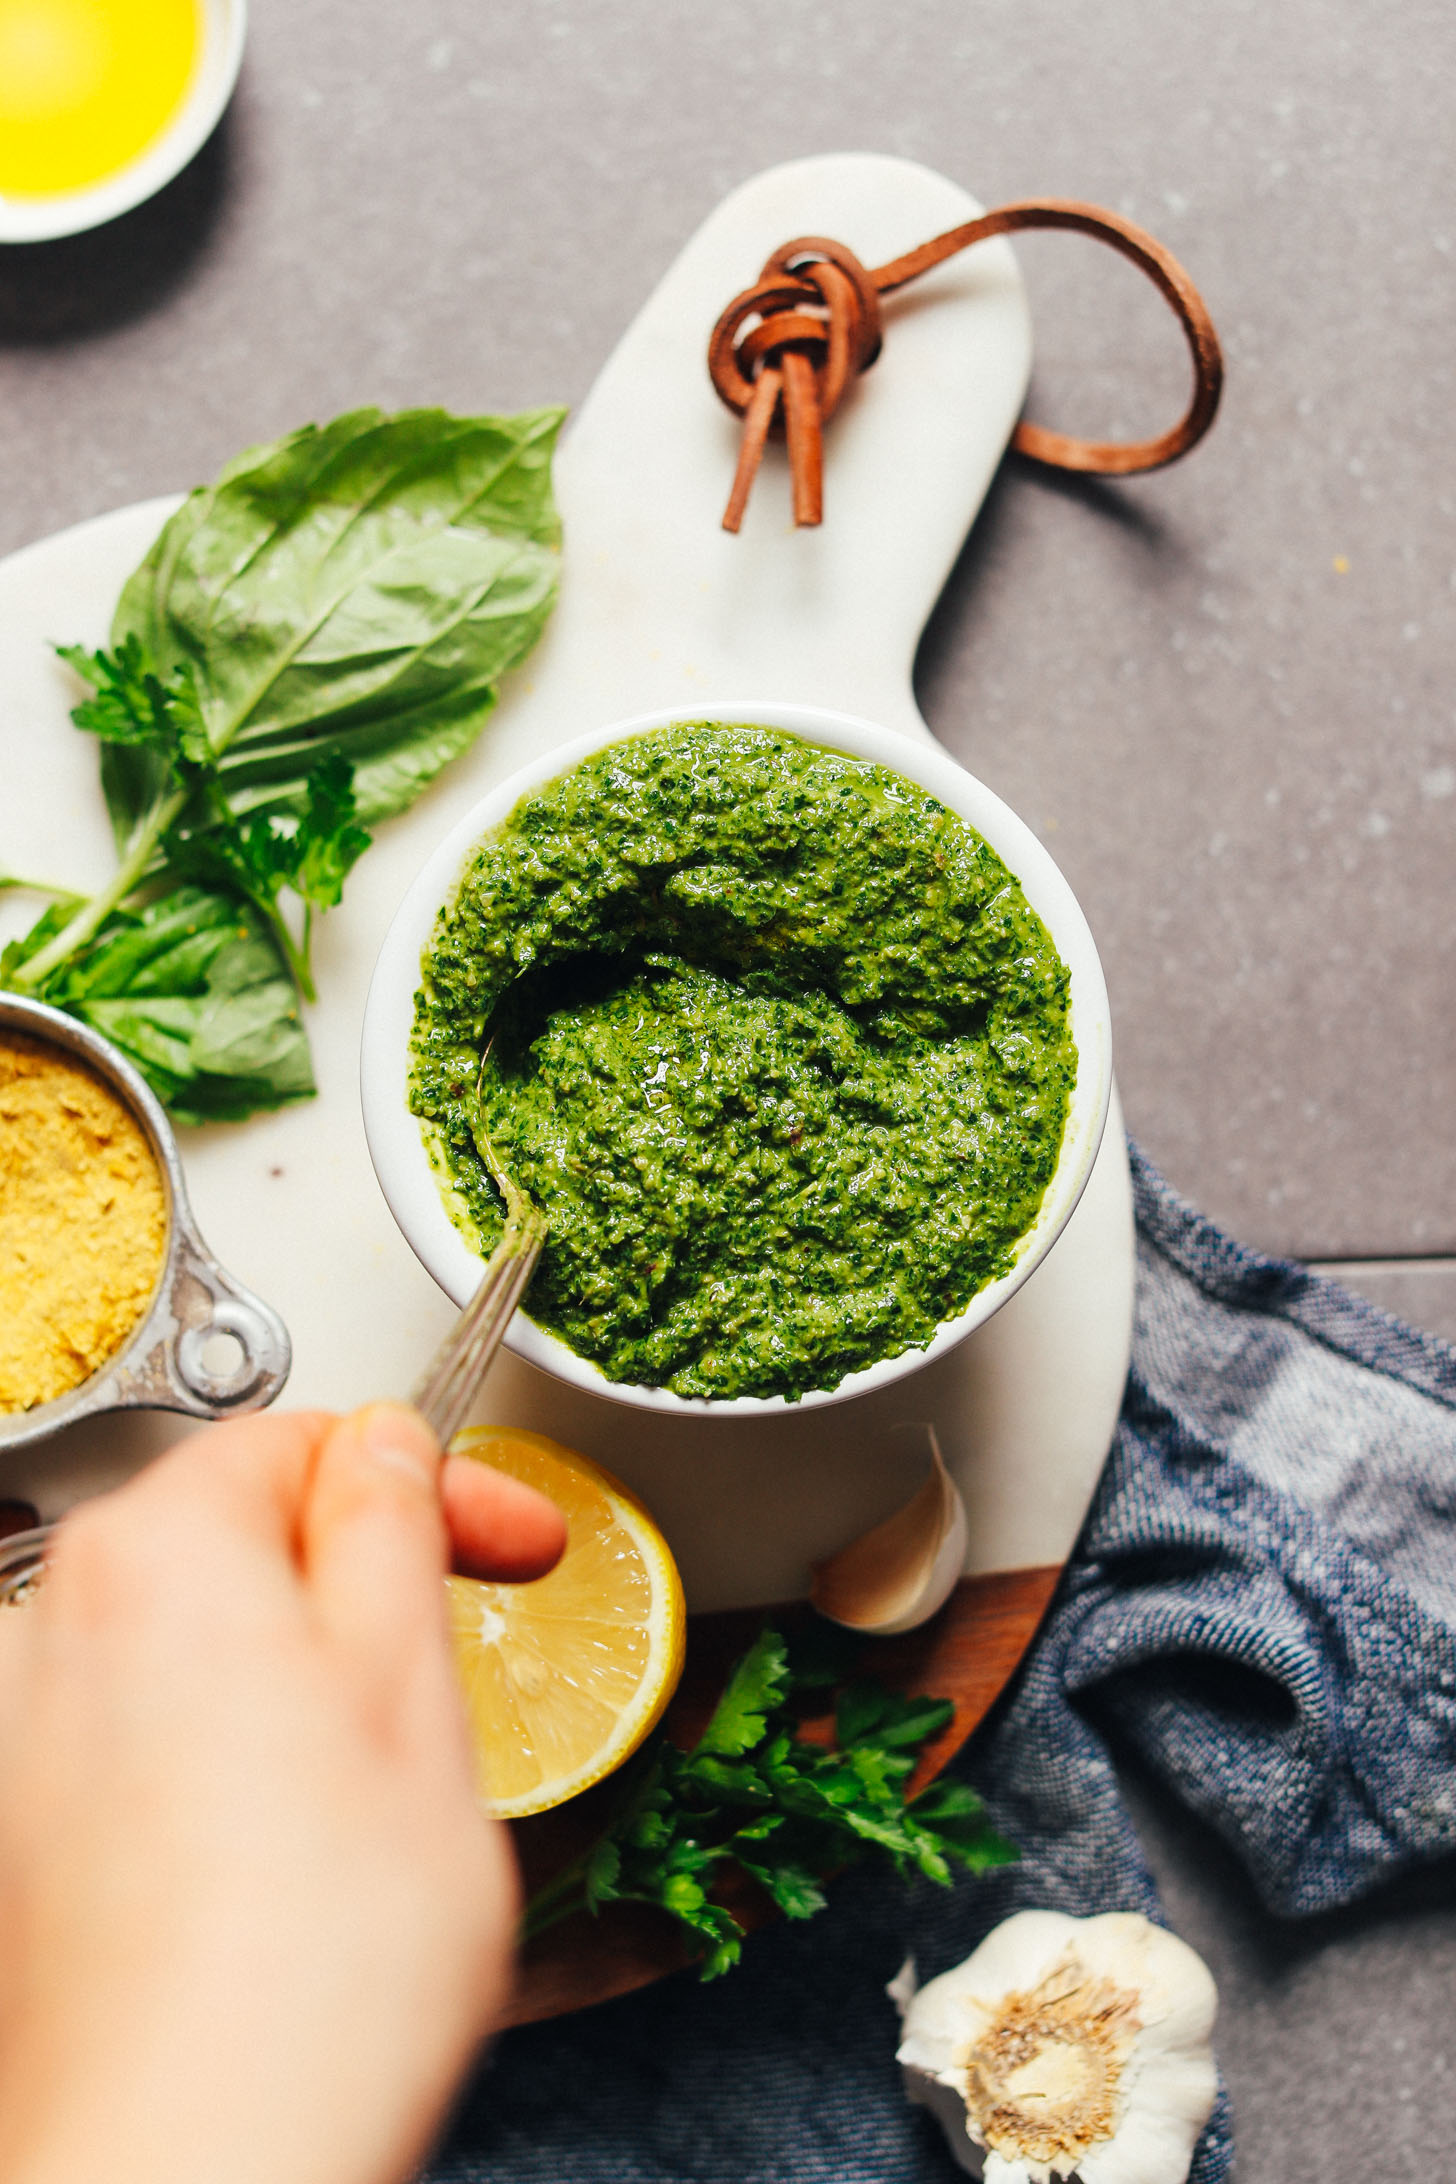 HEALTHY-Super-Green-Vegan-Pesto-BIG-flavor-10-minutes-1-bowl-SO-delicious.-vegan-glutenfree-plantbased-sauce-pesto-greens-minimalistbaker-recipe-6